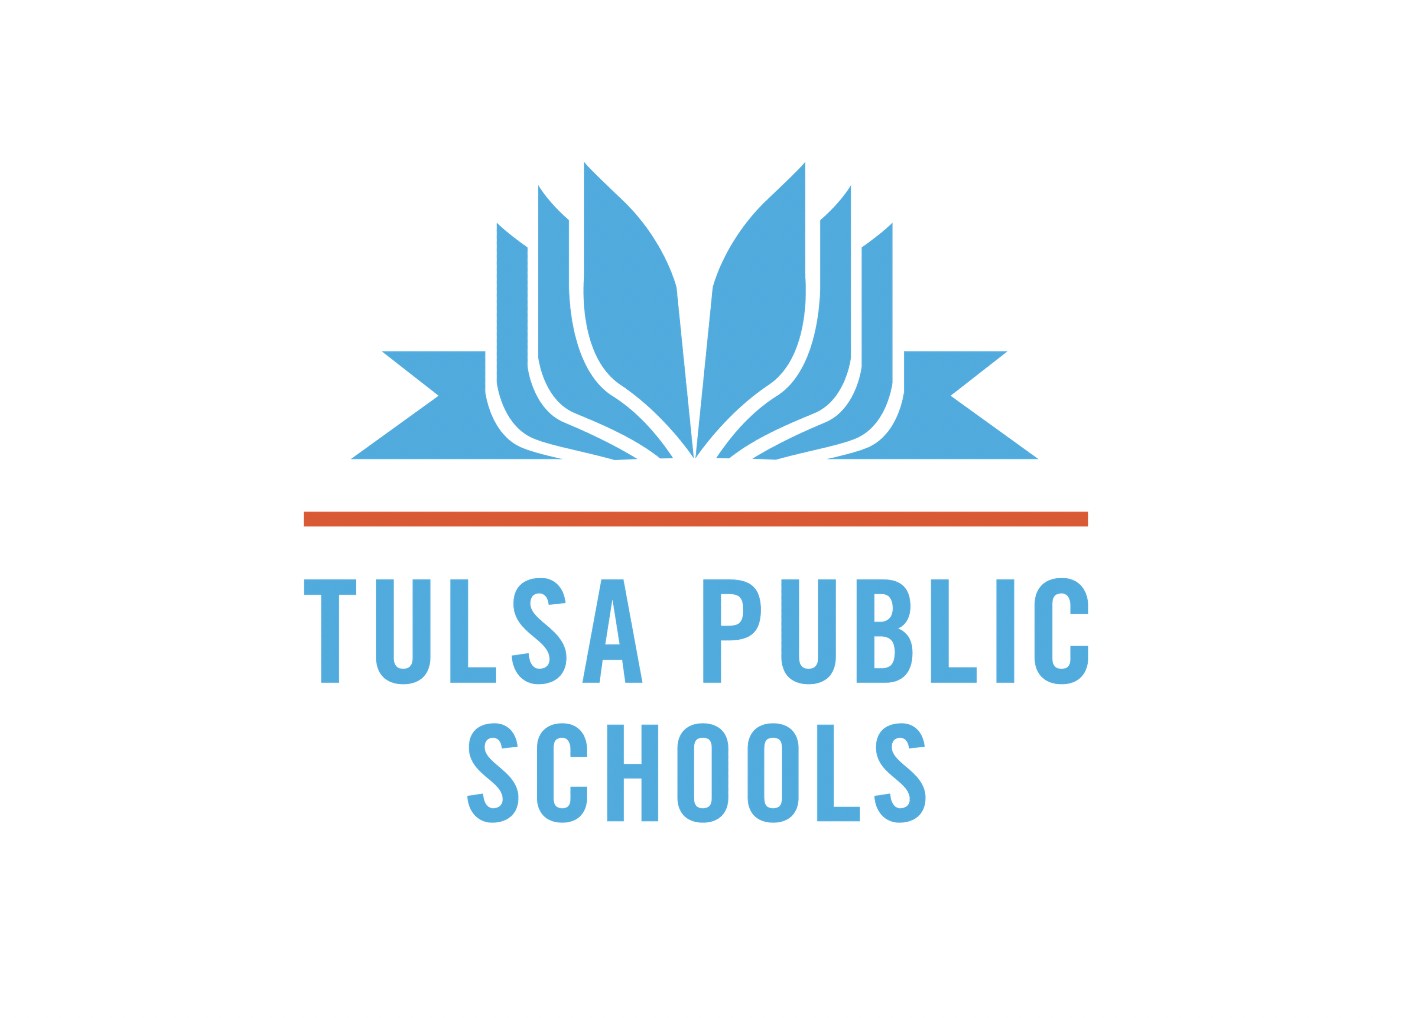 Tulsa Public Schools